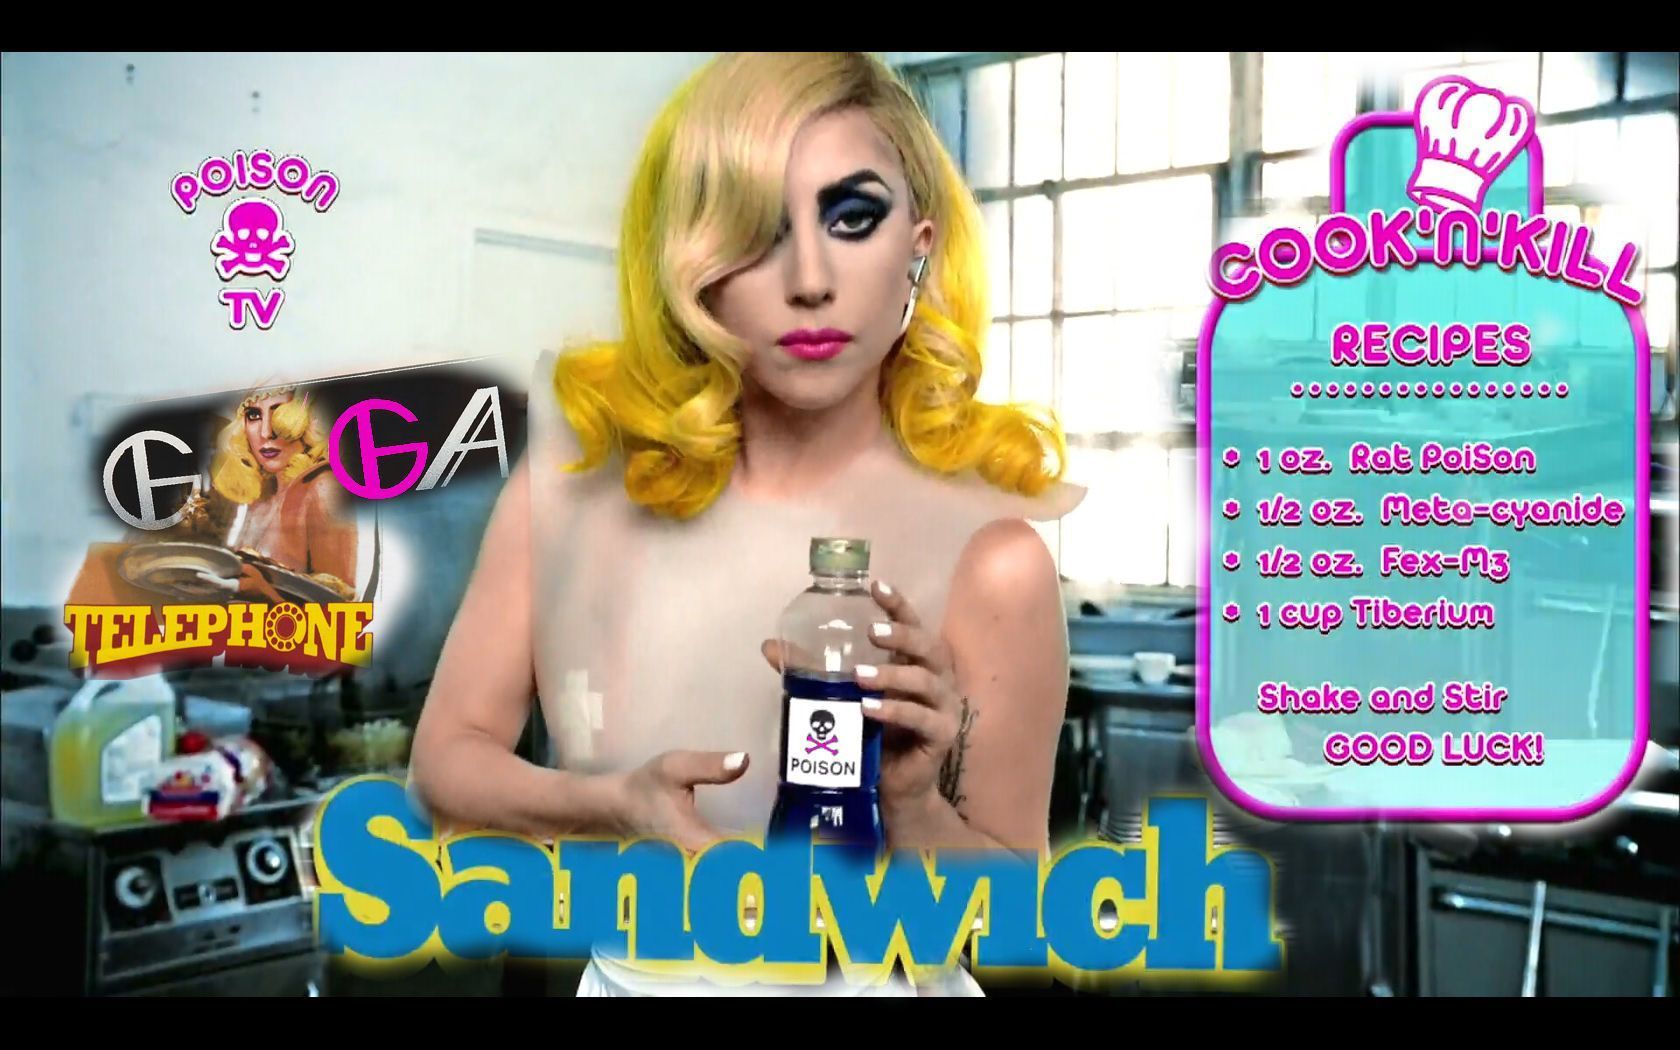 Lady GaGa Wallpapers - Lady Gaga Wallpaper 34677780 - Fanpop